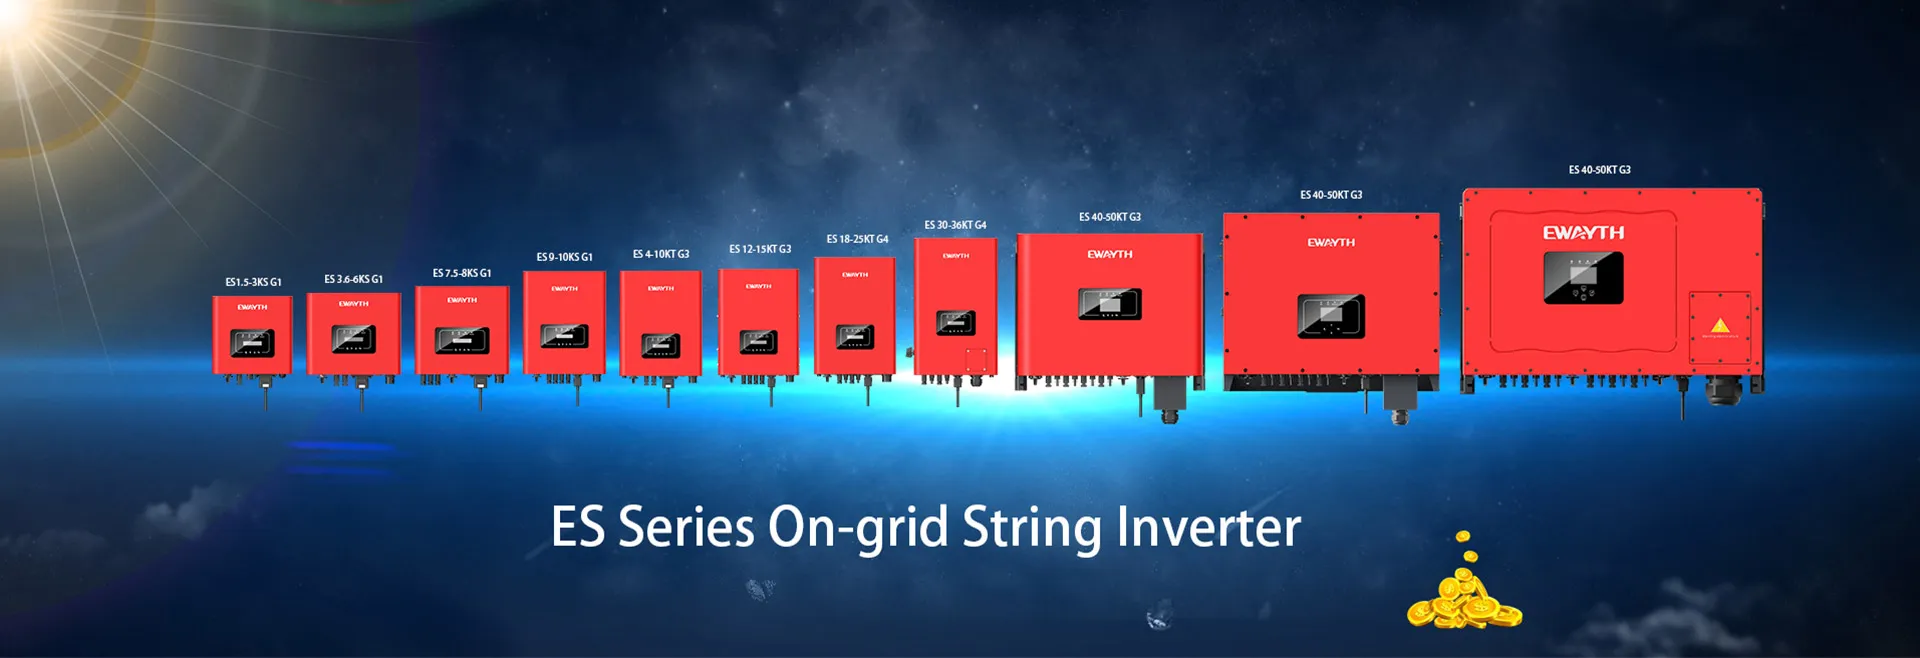 ES Series On-grid String Inverter